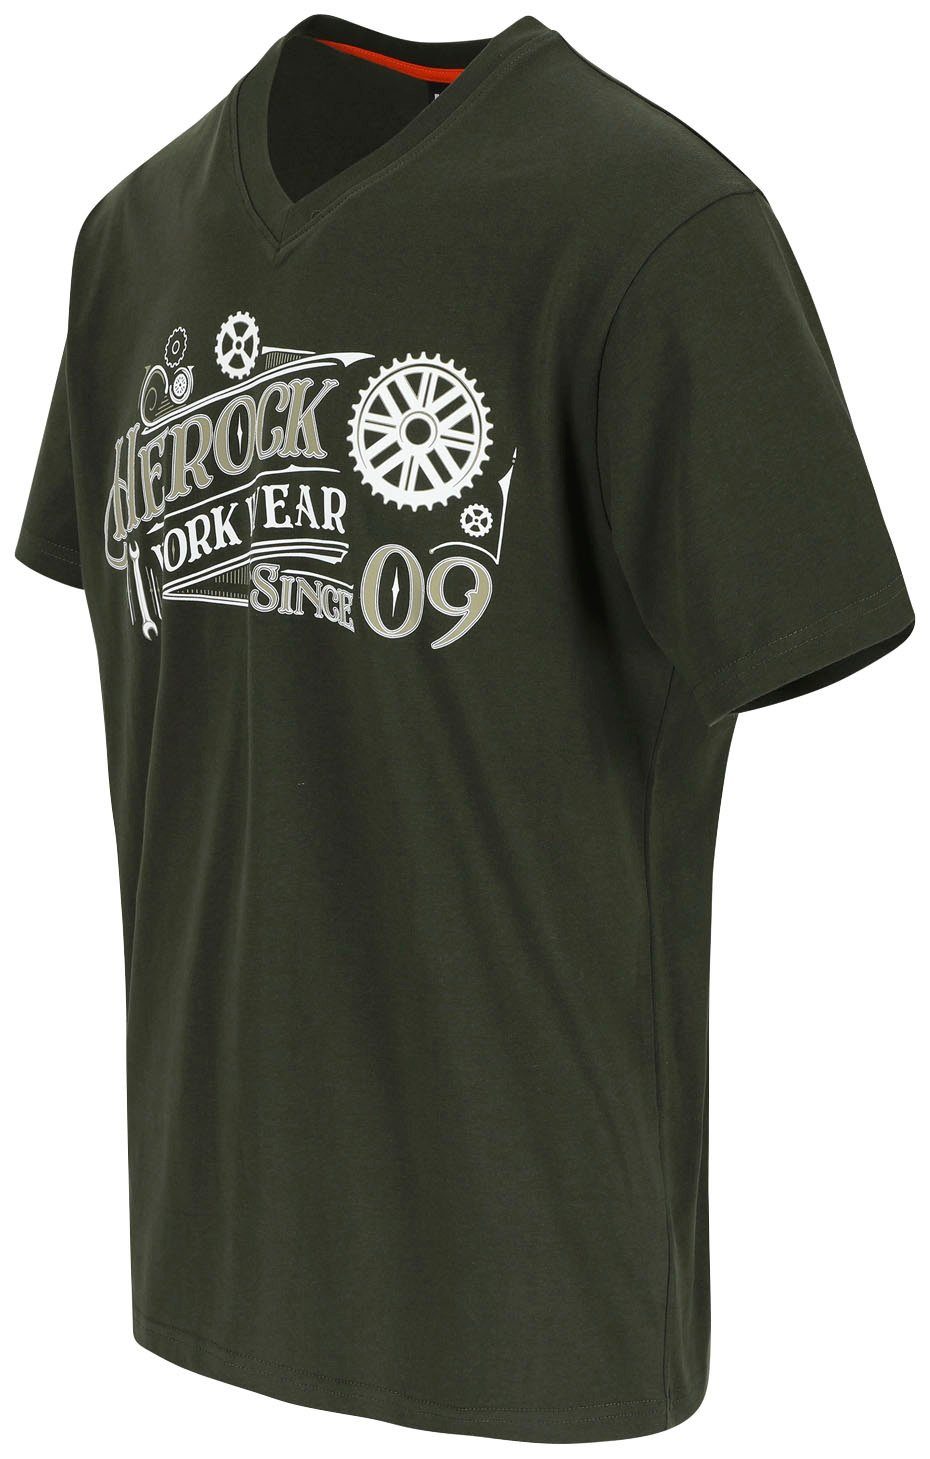 Herock T-Shirt Barber Limited Edition